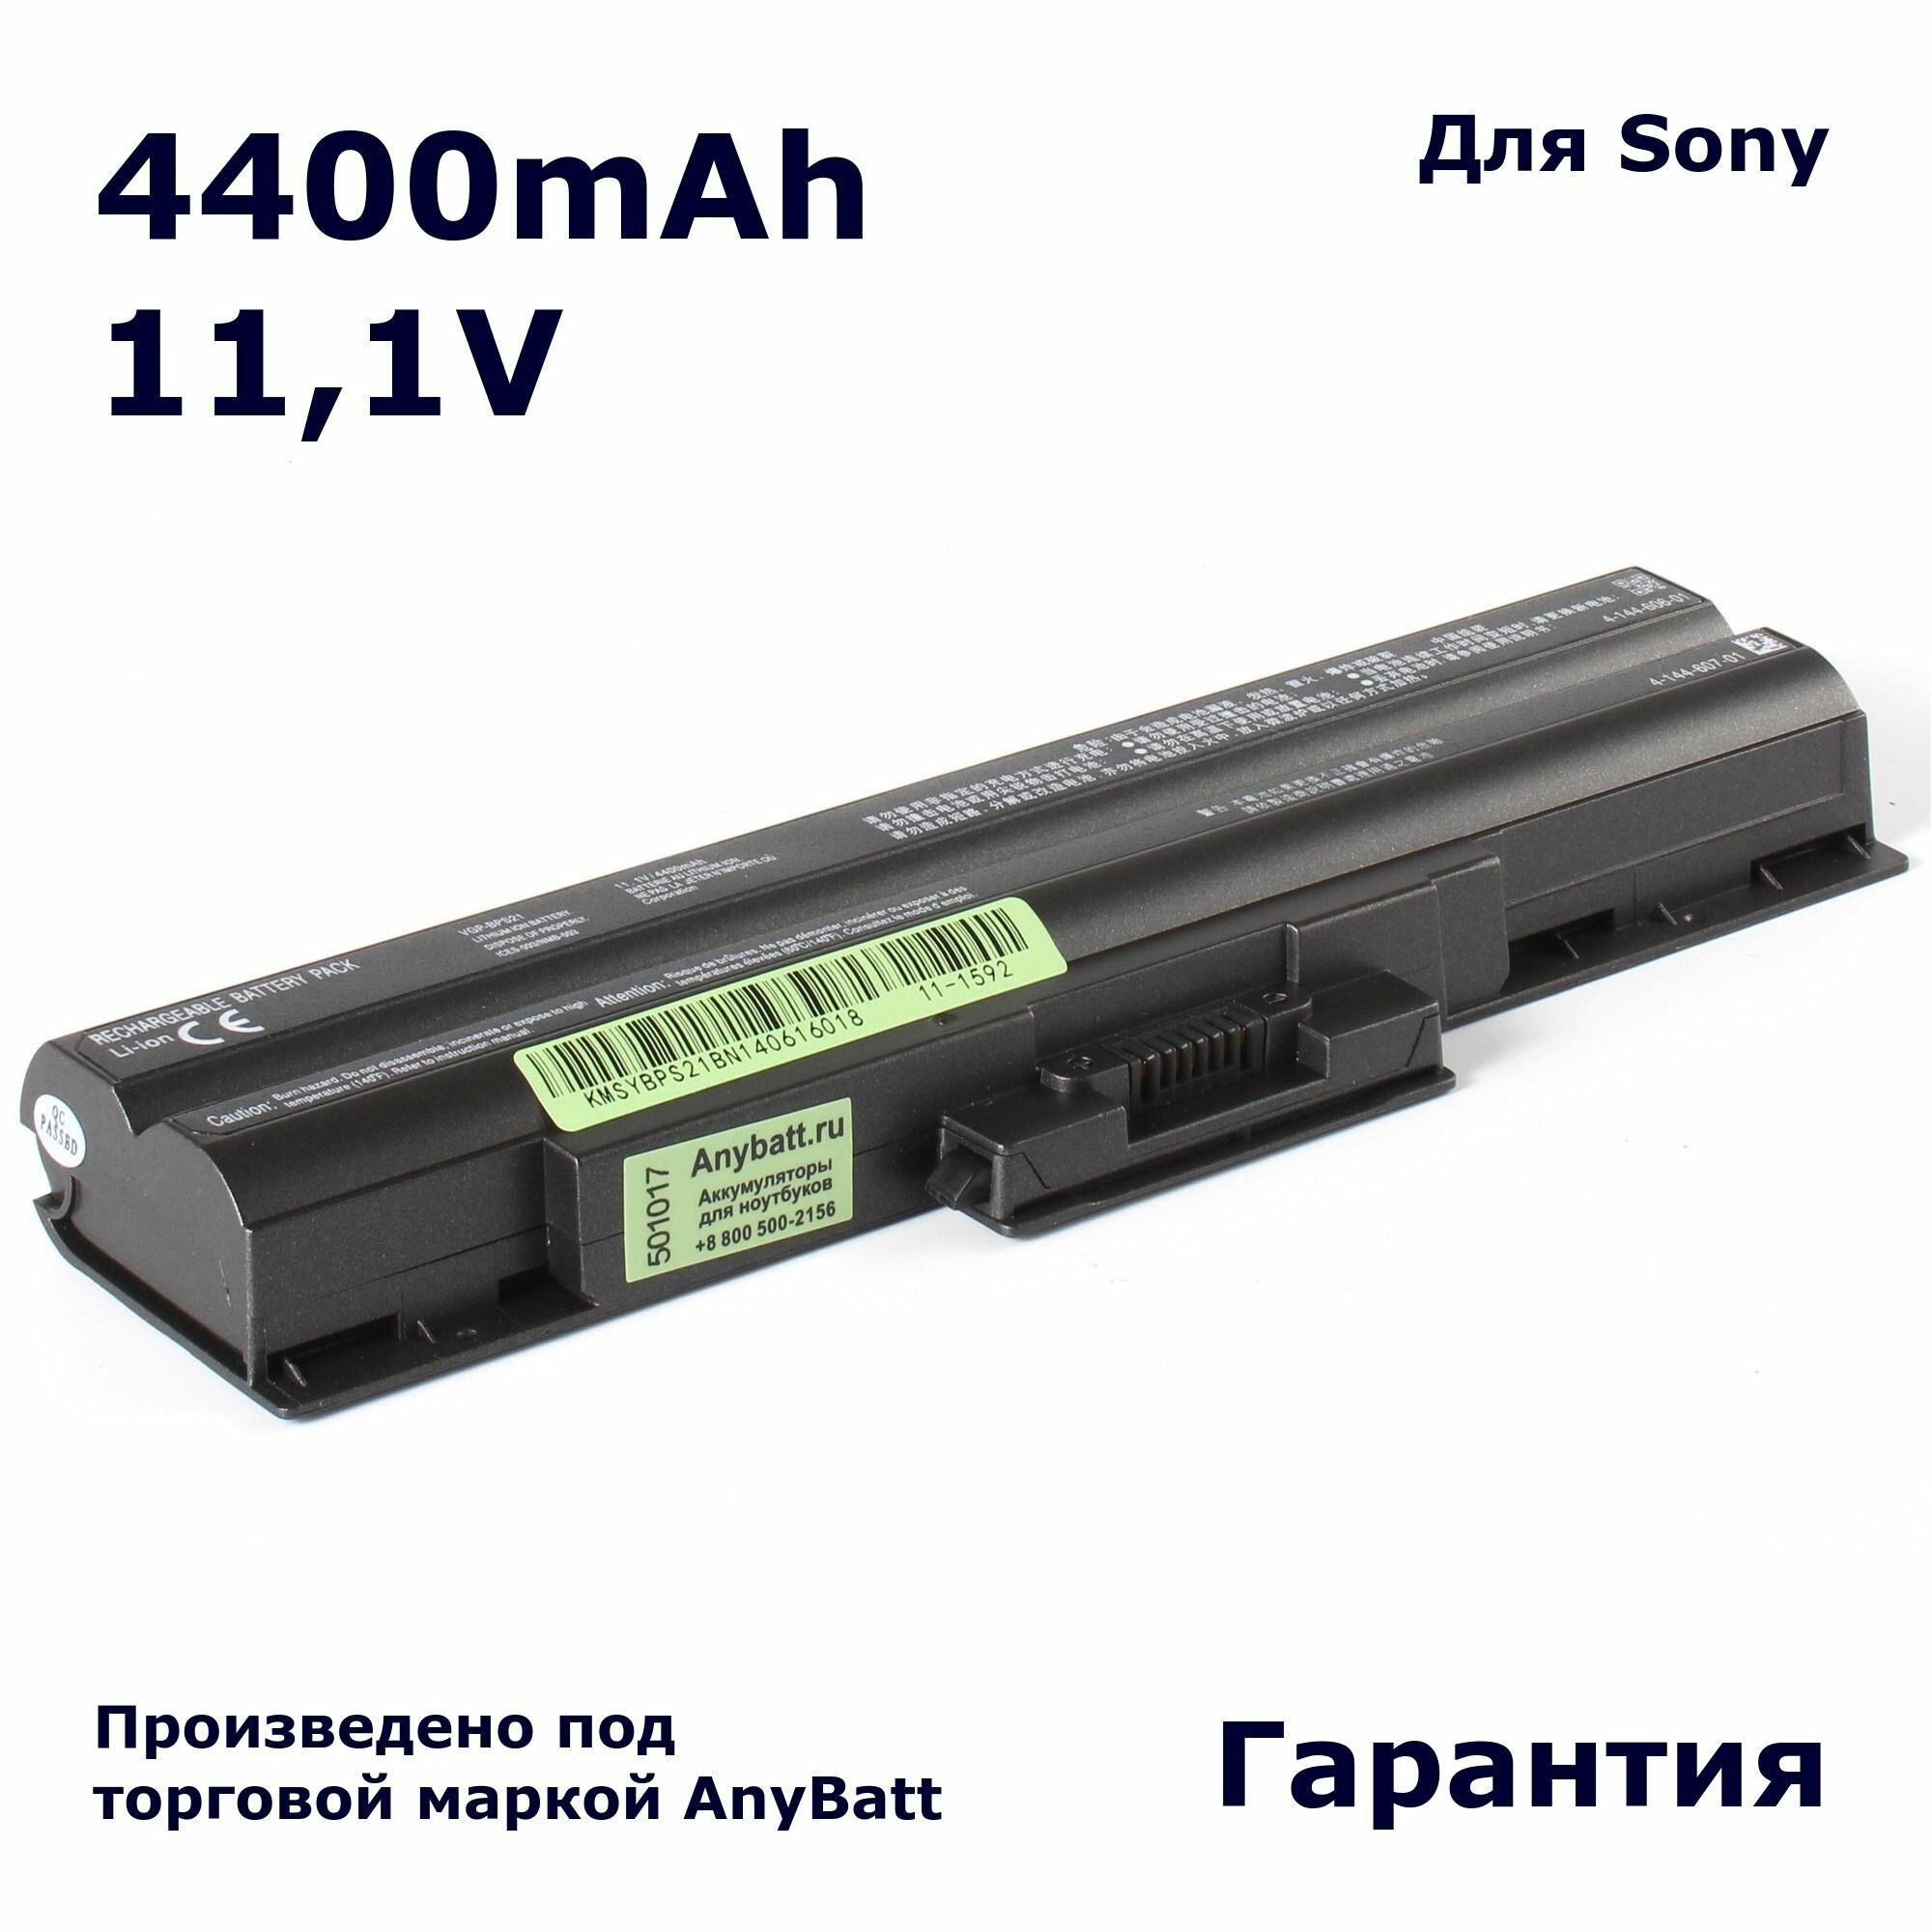 Аккумулятор AnyBatt 4400mAh, для PCG-81211V PCG-51111V VGN-FW11ER PCG-31312V Vaio VGN-FW11SR VGN-FW11MR SVE1112M1R VGN-FW SVE1111M1R